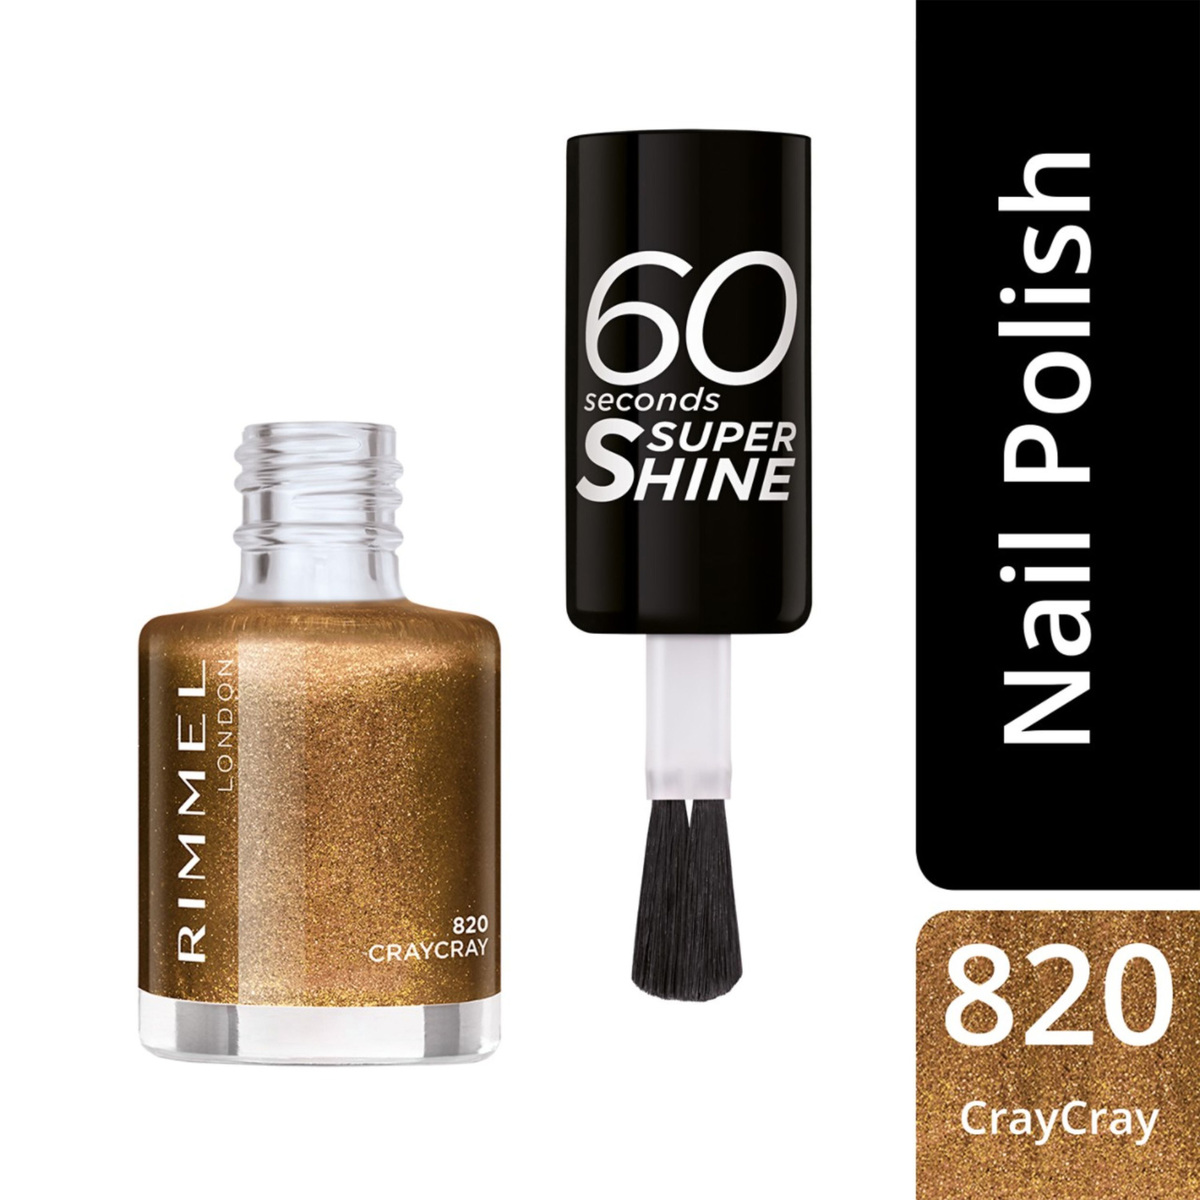 Rimmel London 60 Seconds Super Shine Nail Polish, 820 Craycray, 8 ml - 0.25 fl oz